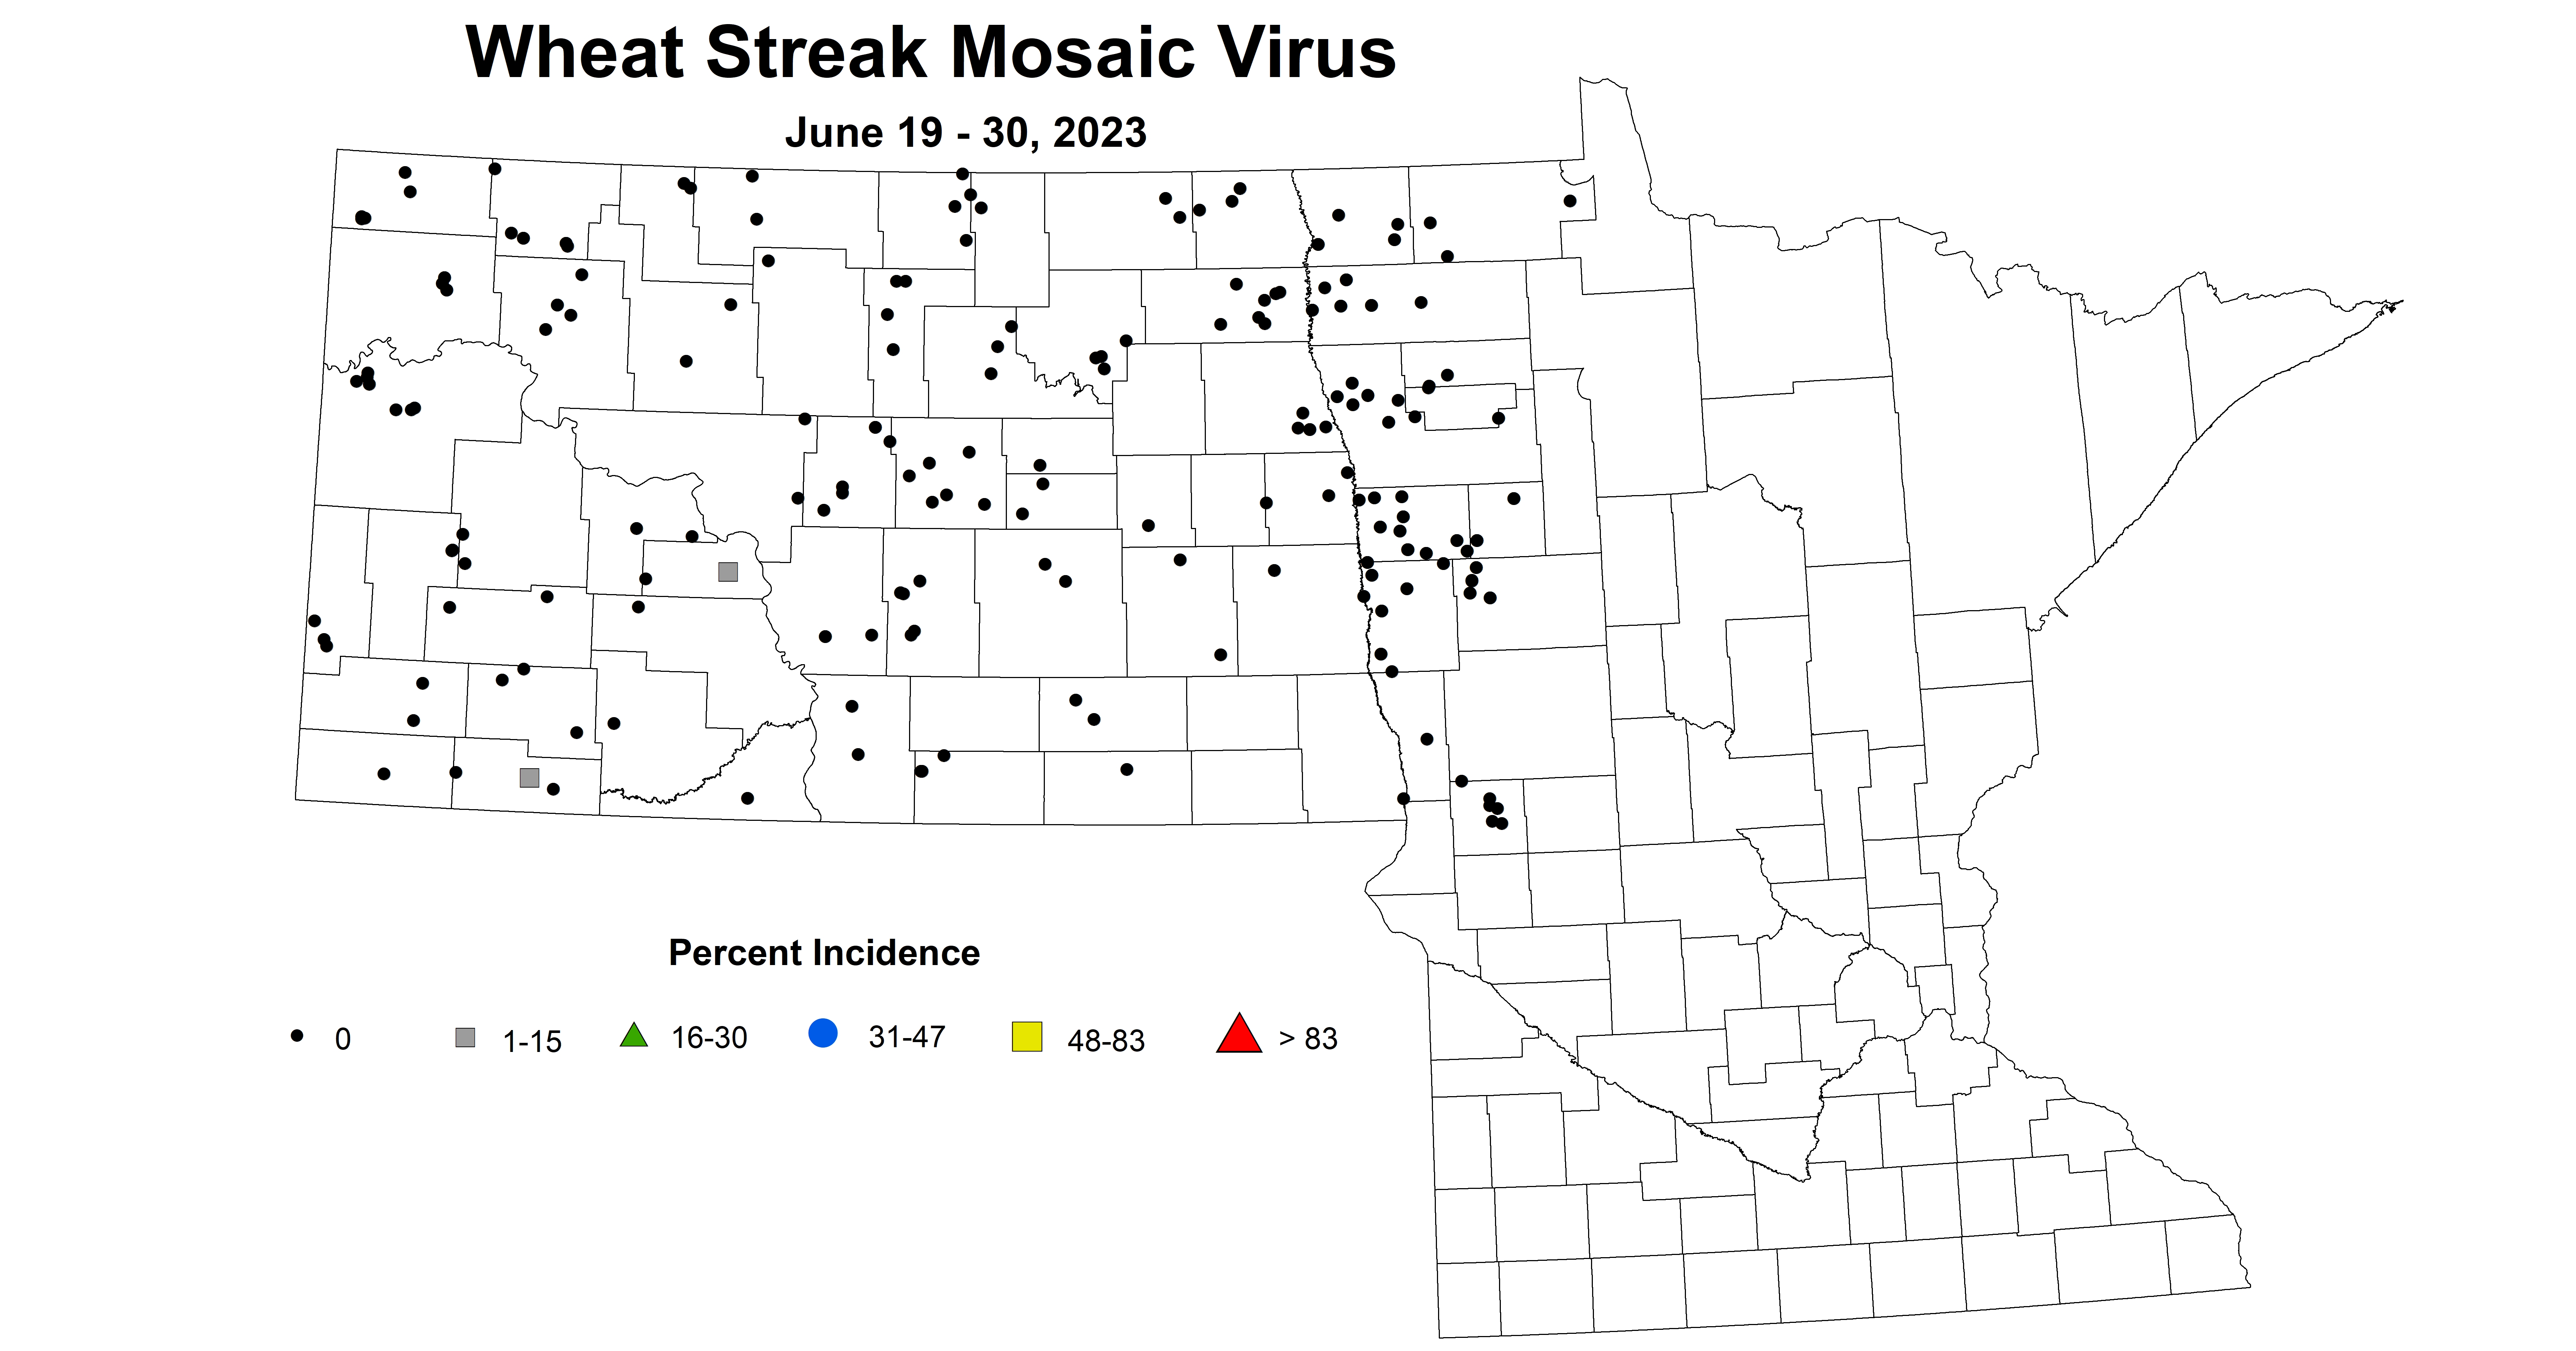 wheat streak mosaic virus June 19-30 2023